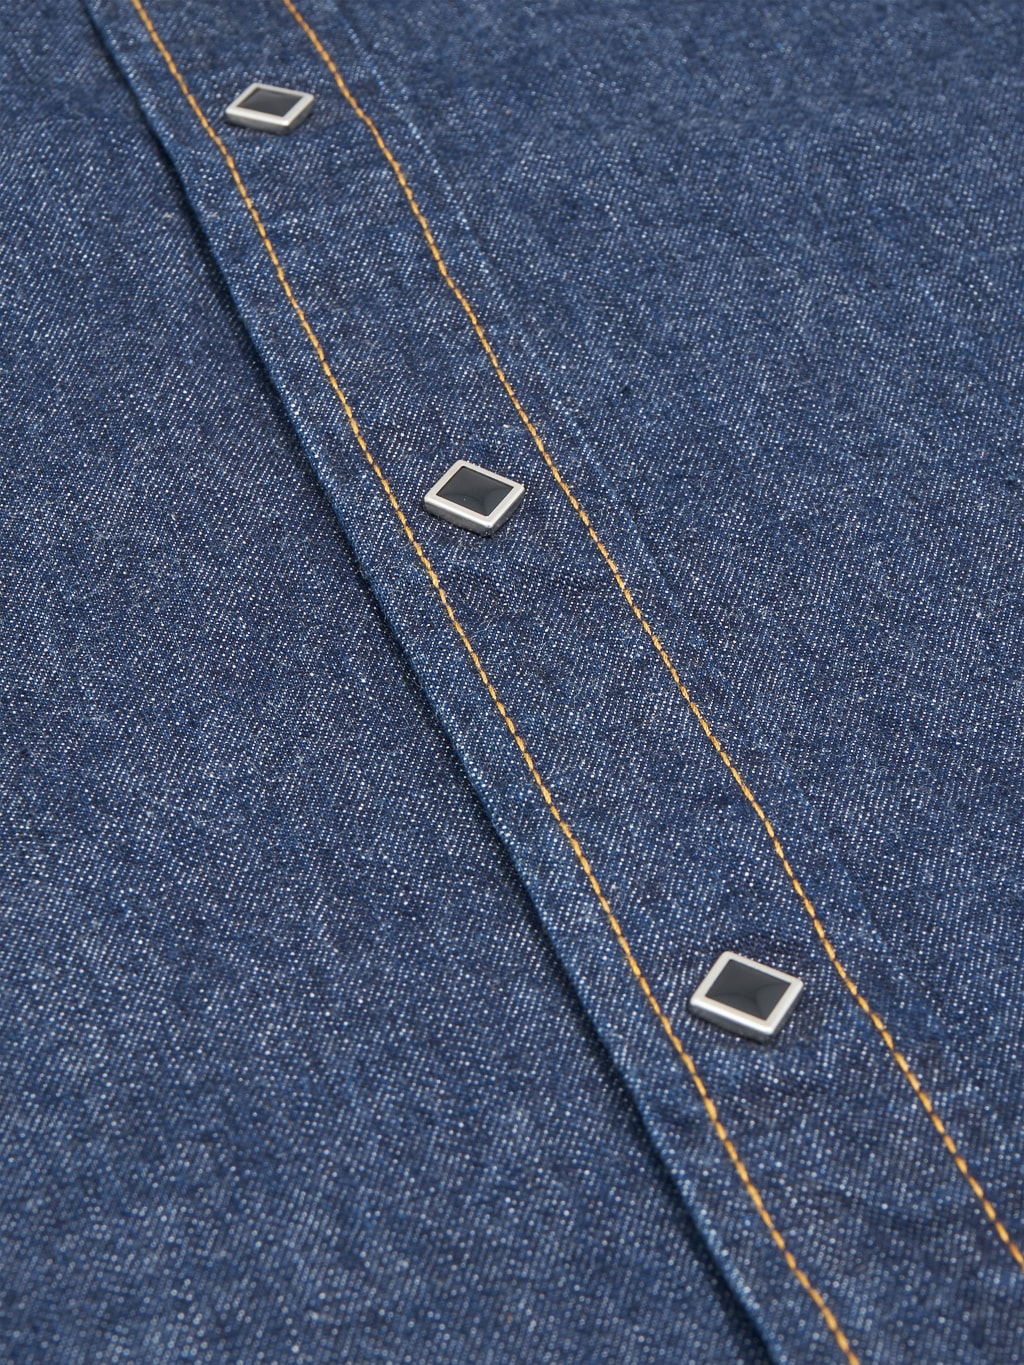 Samurai Jeans 10oz "Hisho SWD-L02-OVS" Selvedge Western Denim Shirt